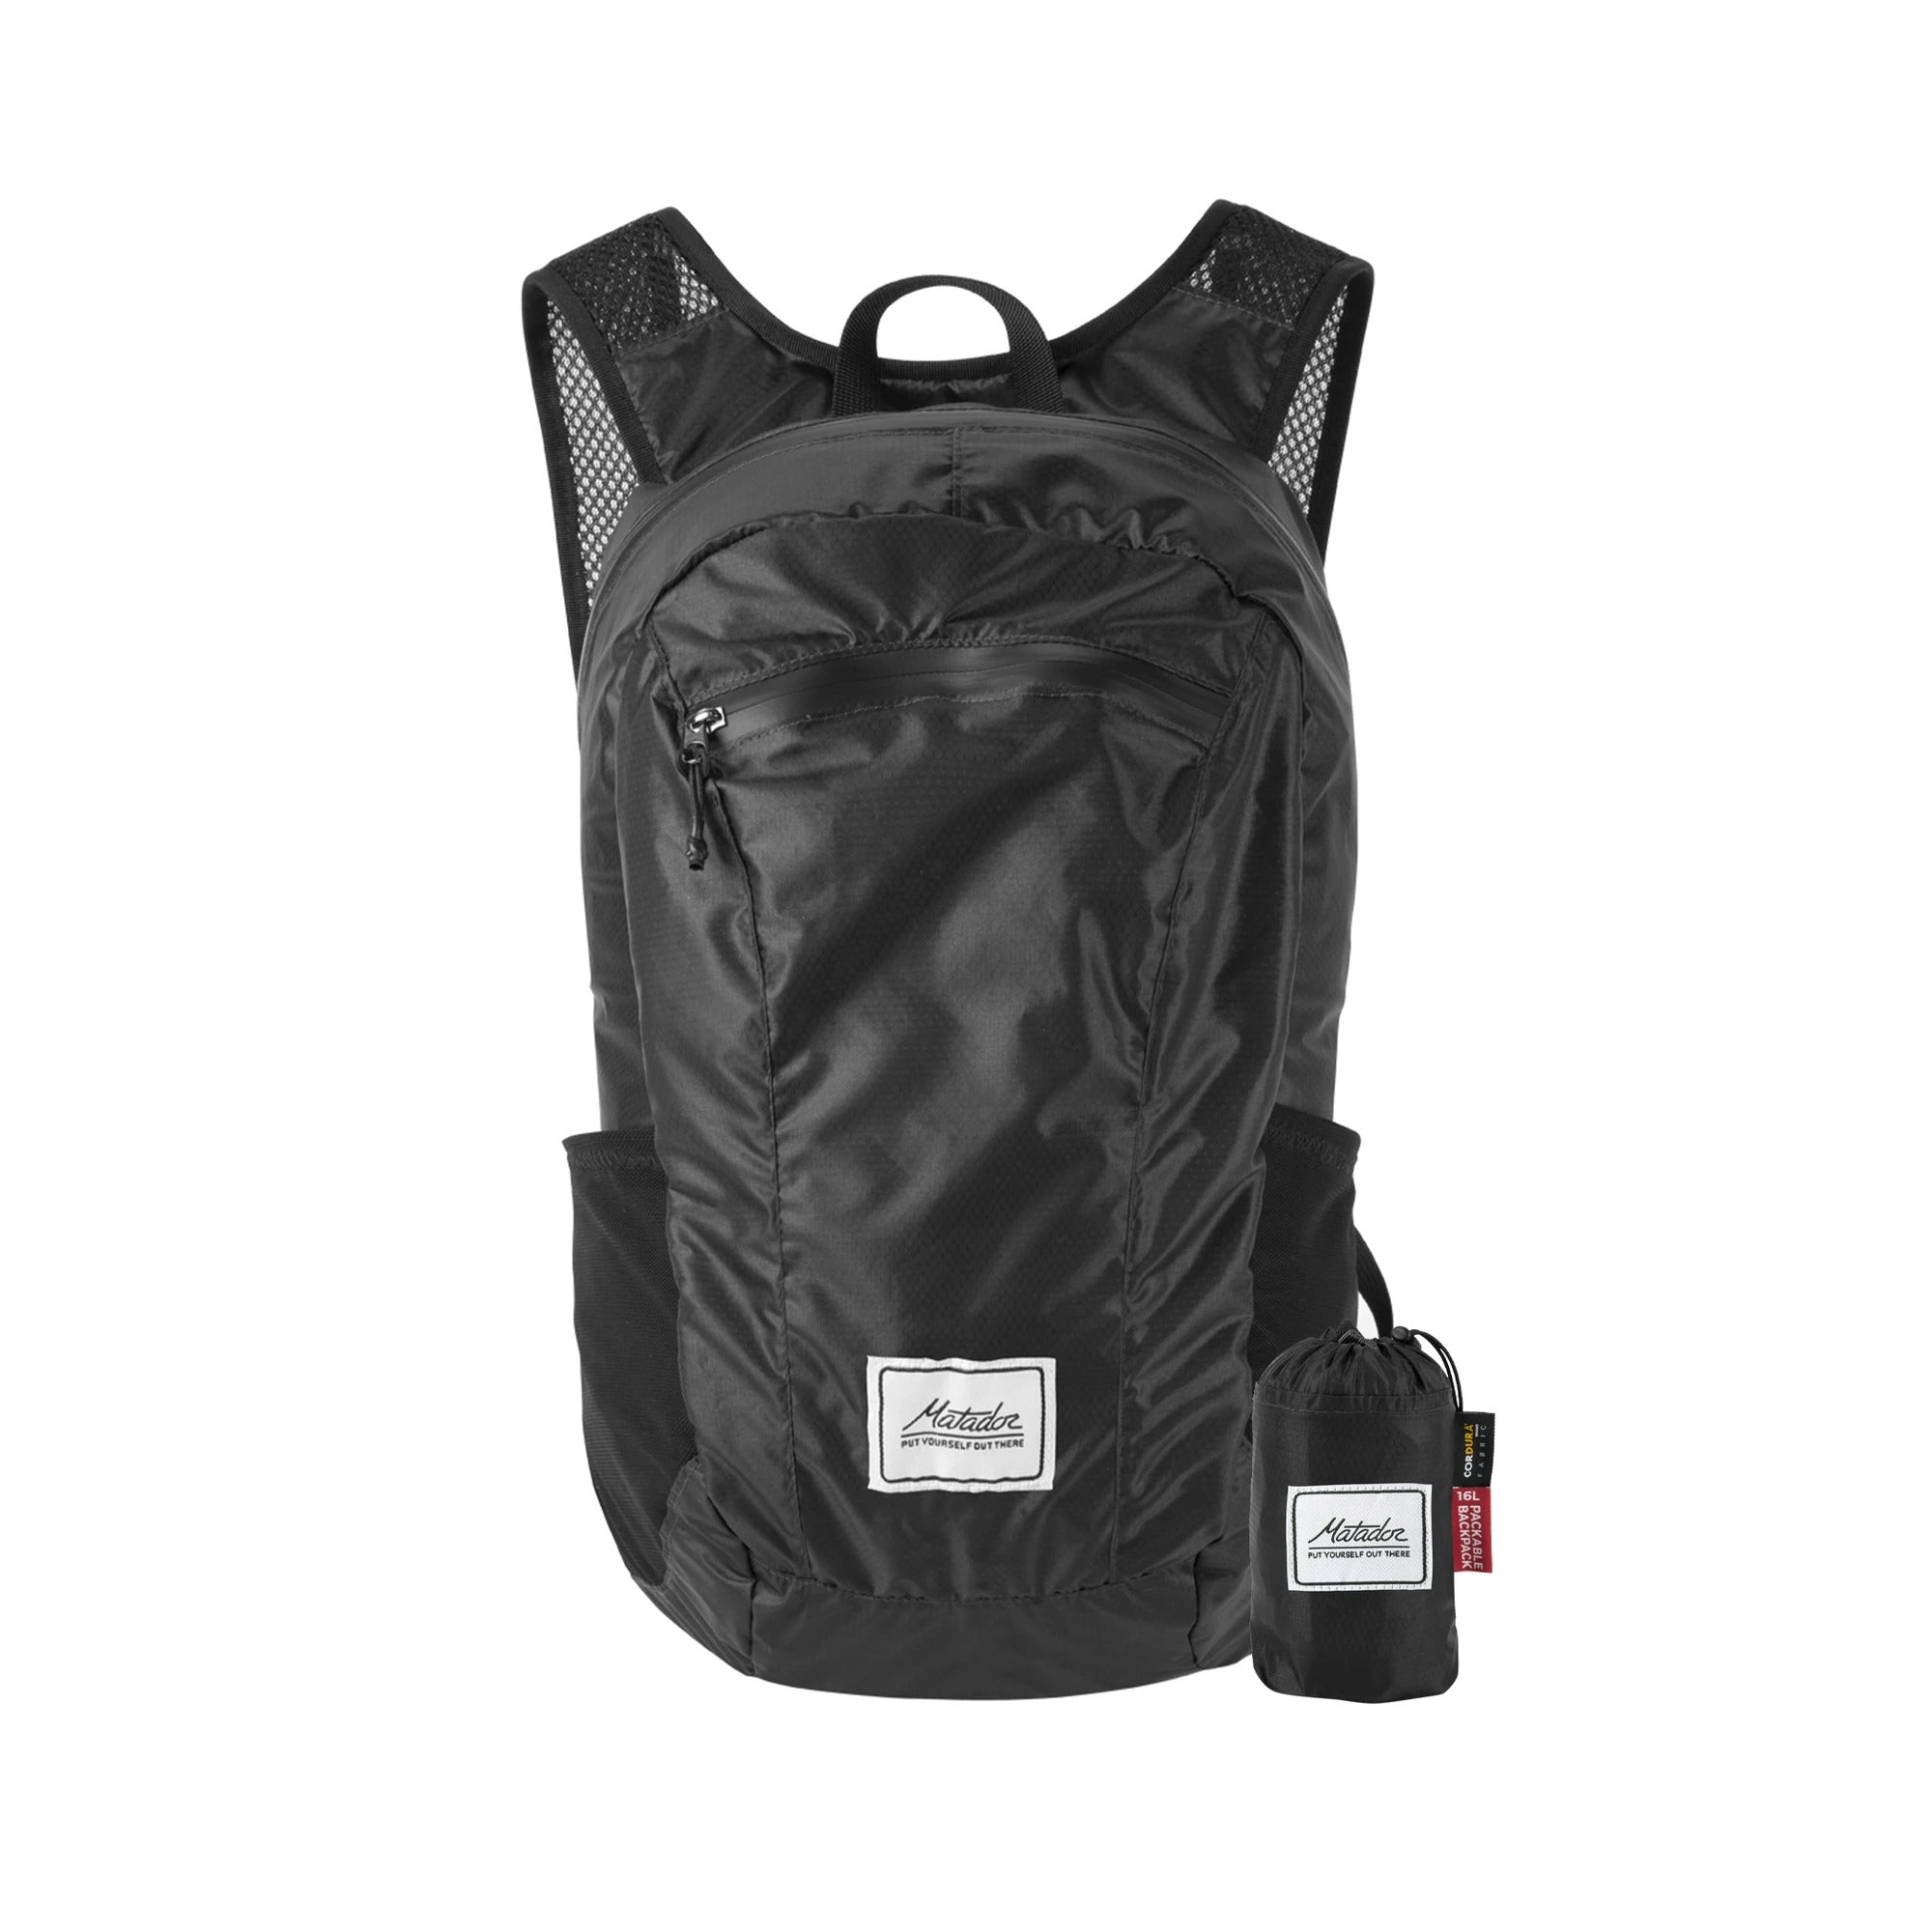 Matador DL16 Packable Backpack